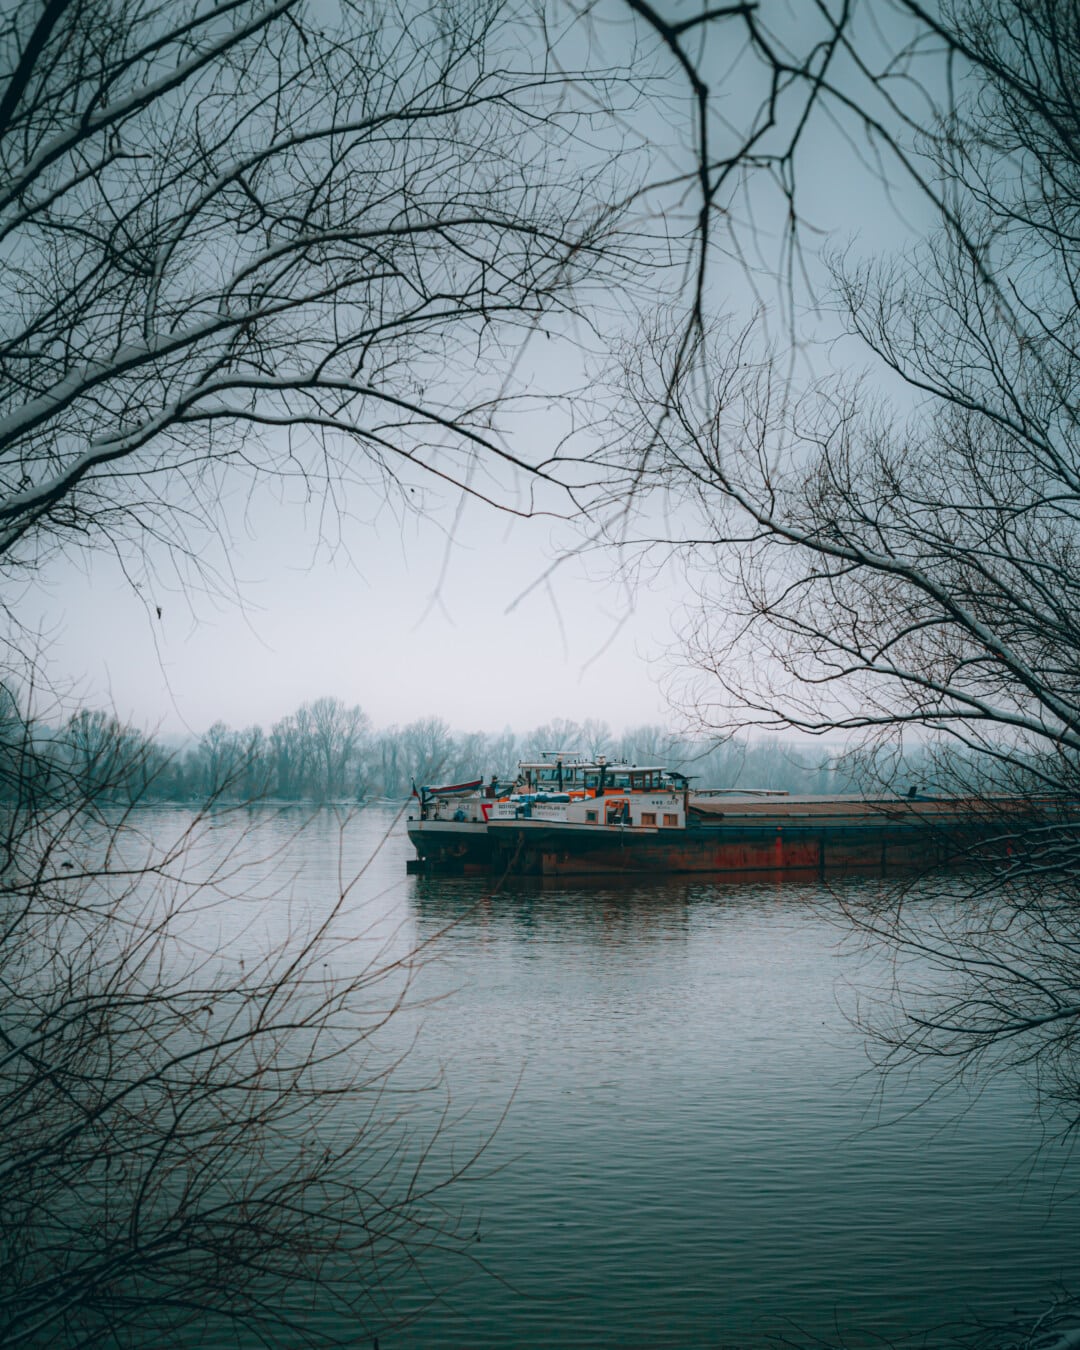 cargo ship, winter, morning, barge, foggy, riverbank, trees, water, lake, landscape